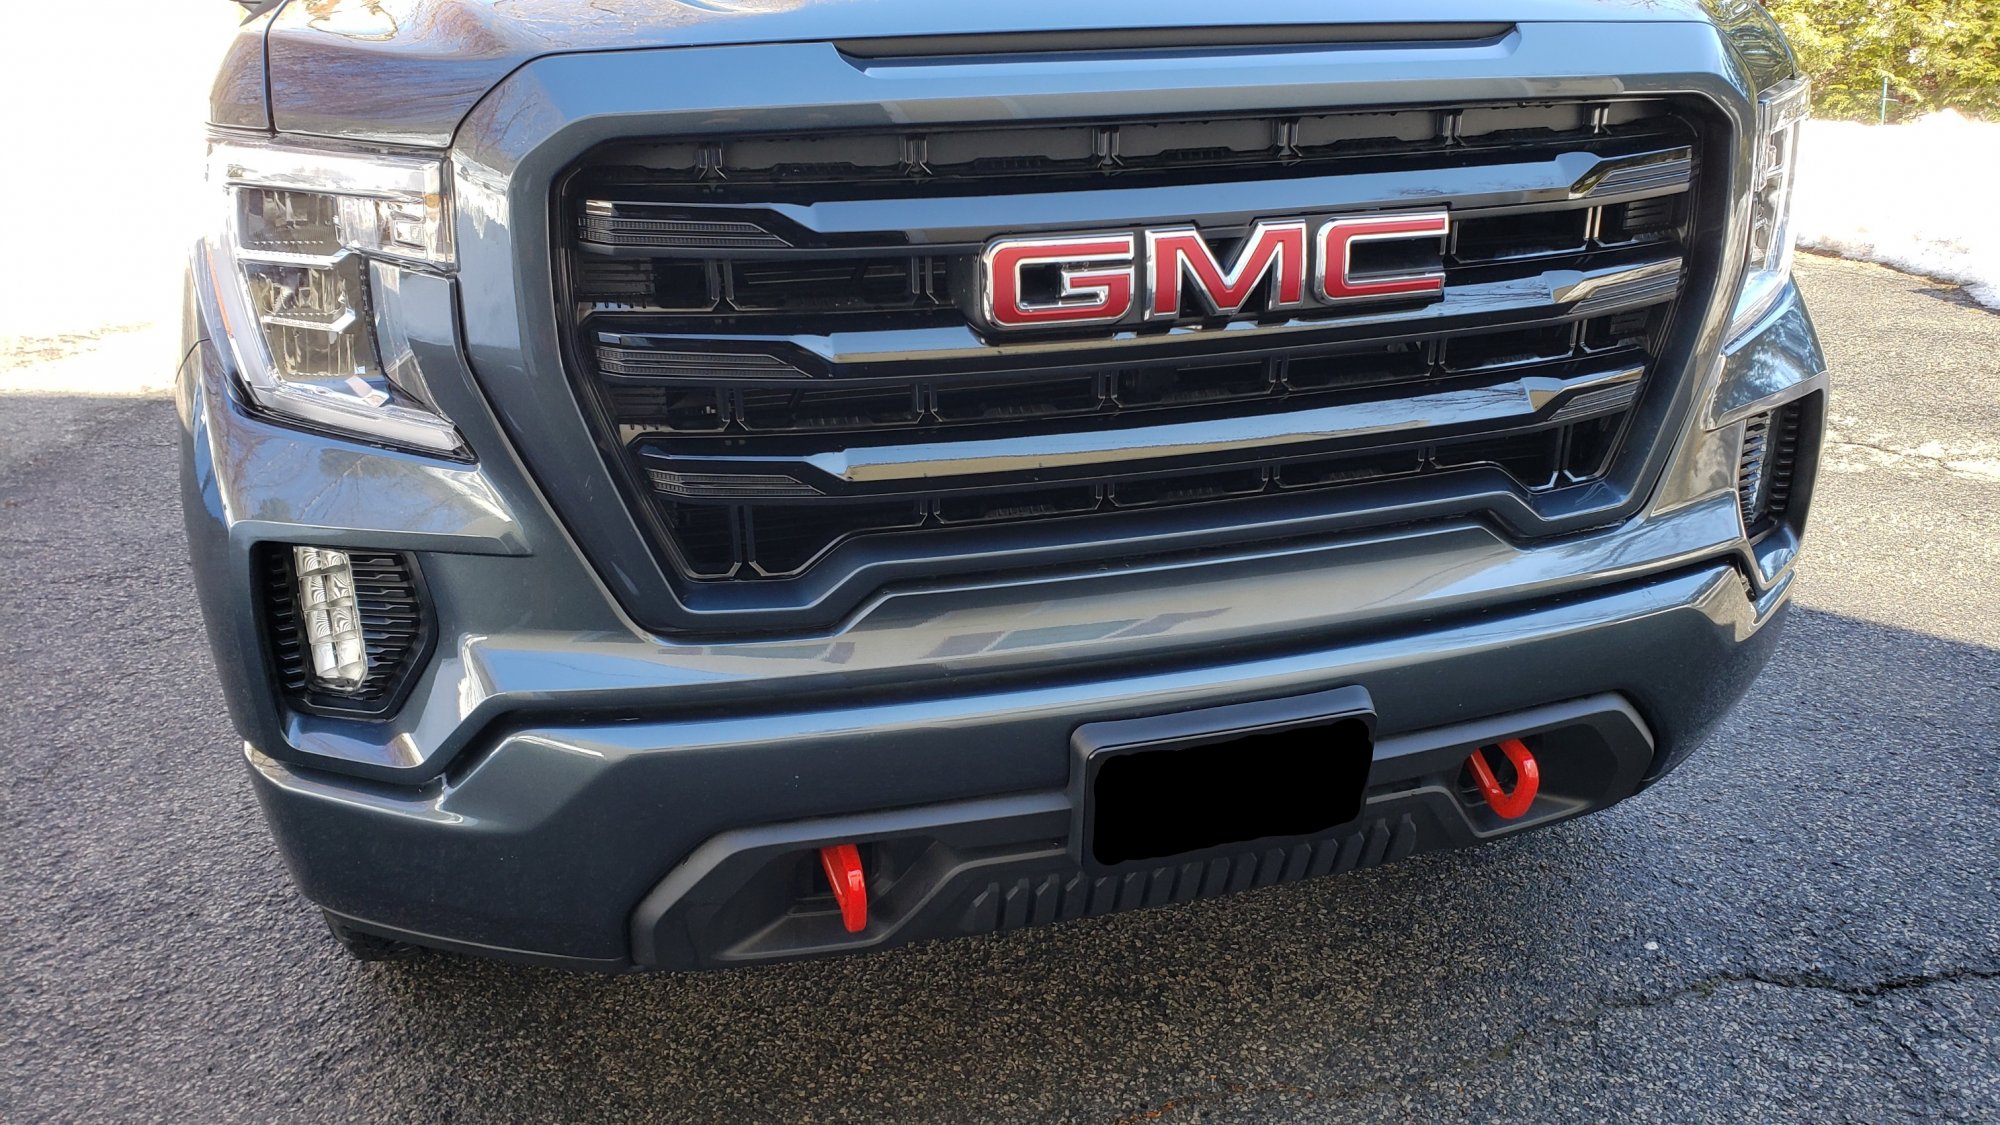 Red tow hooks - Page 6 - 2019-2025 Chevy Silverado & GMC Sierra Mods - GM- Trucks.com